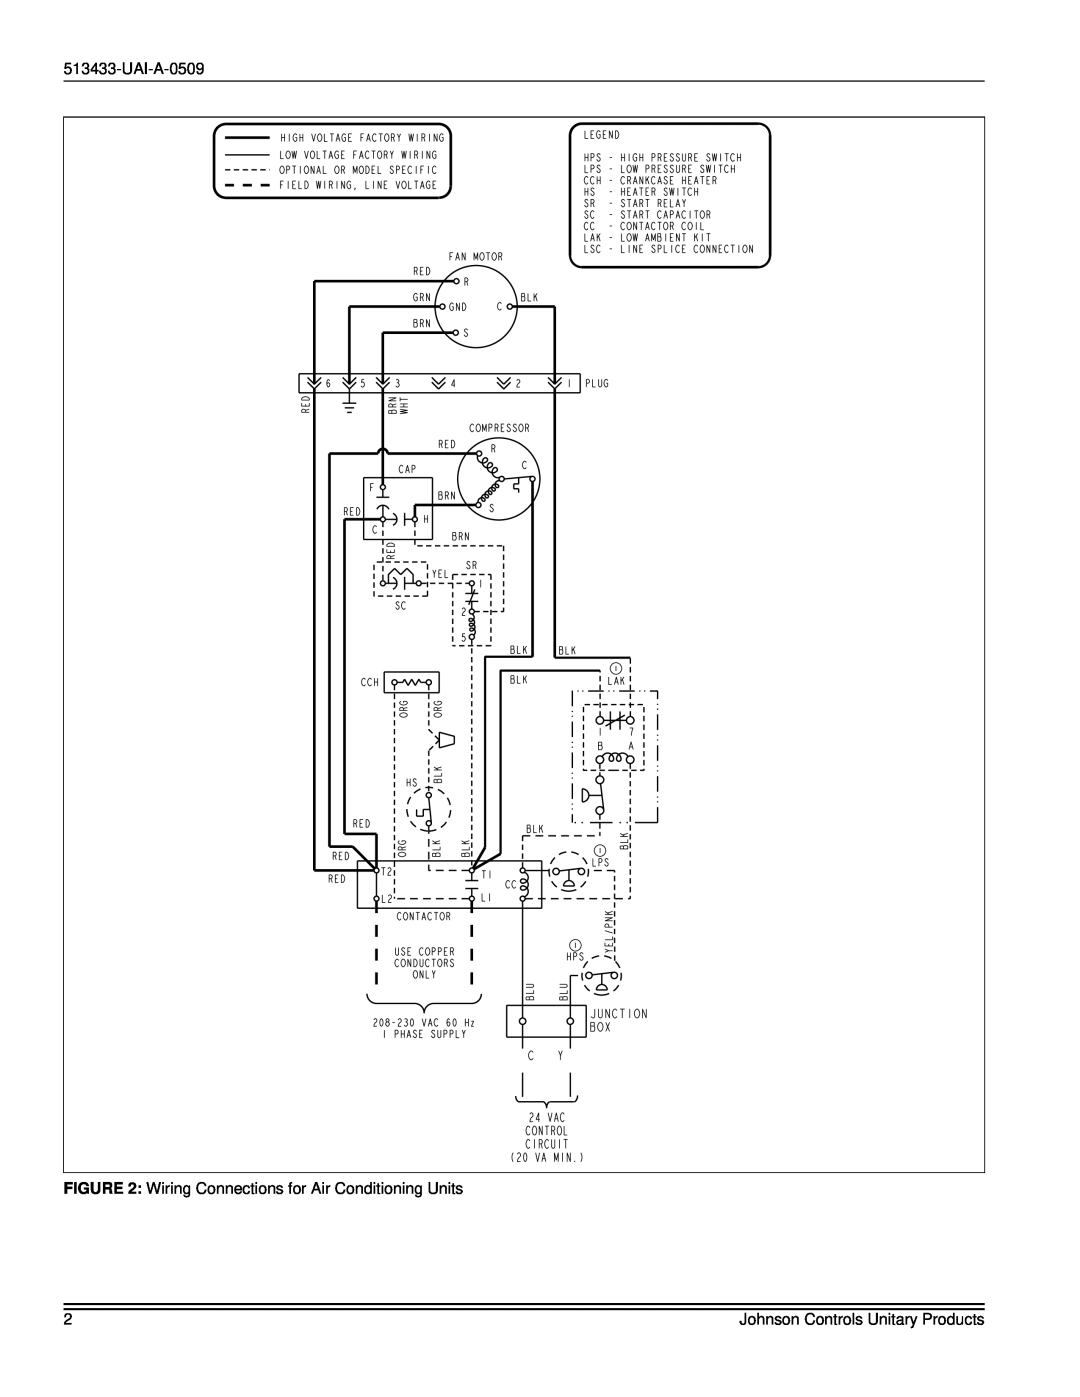 Johnson Controls Low Ambient Pressure Kit installation manual UAI-A-0509, Johnson Controls Unitary Products 